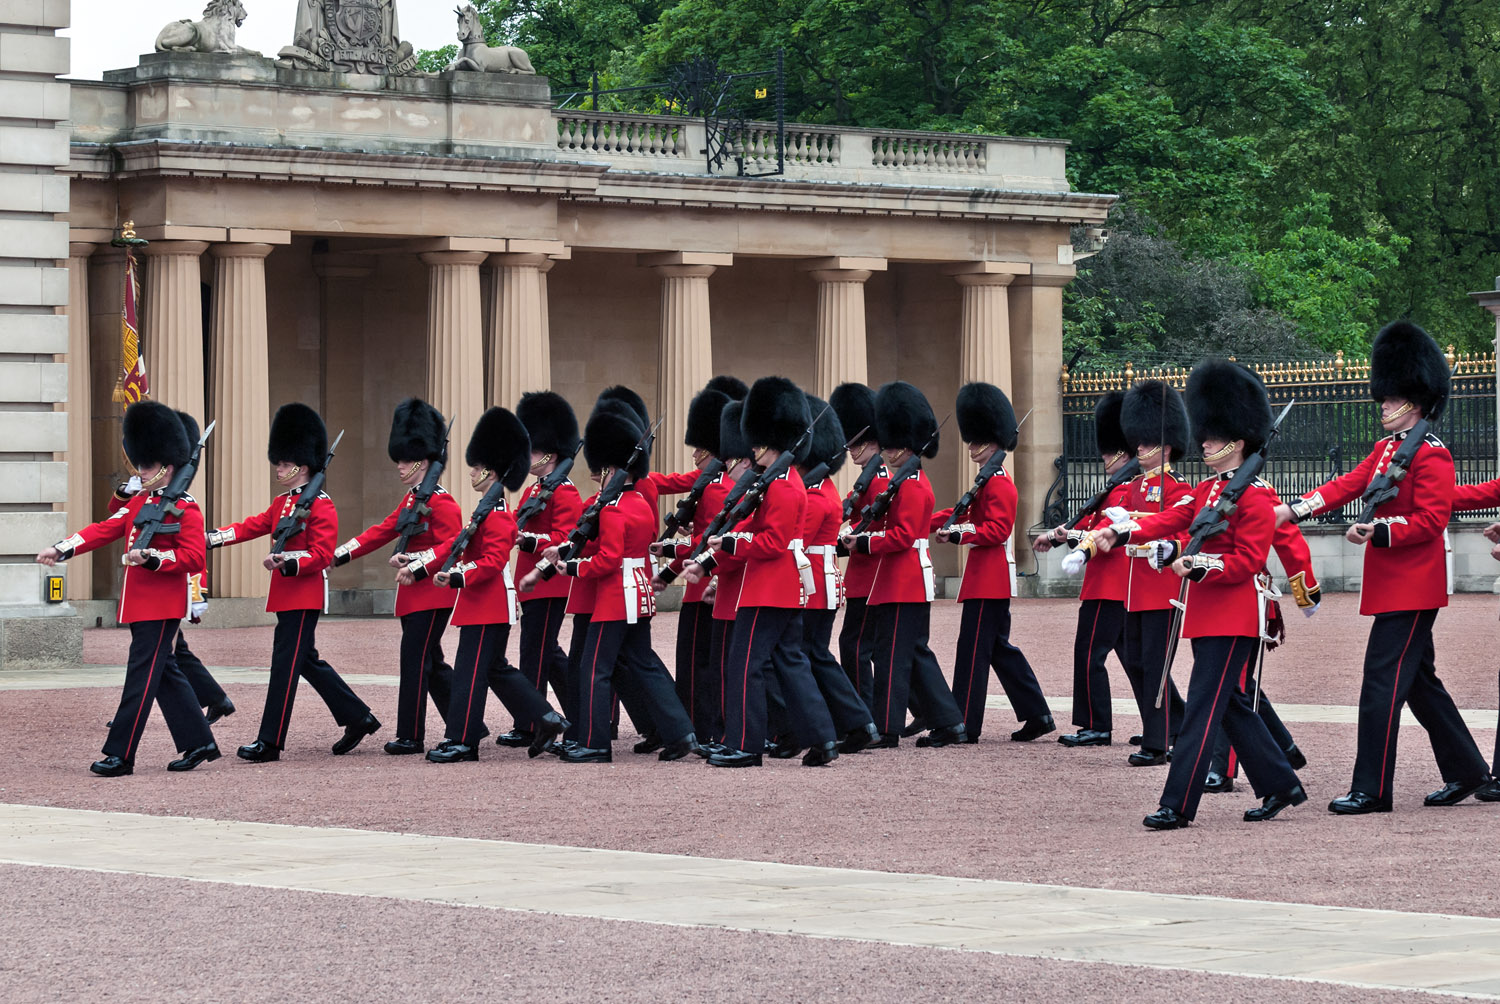 Royal Guards, Buckingham Palace, London